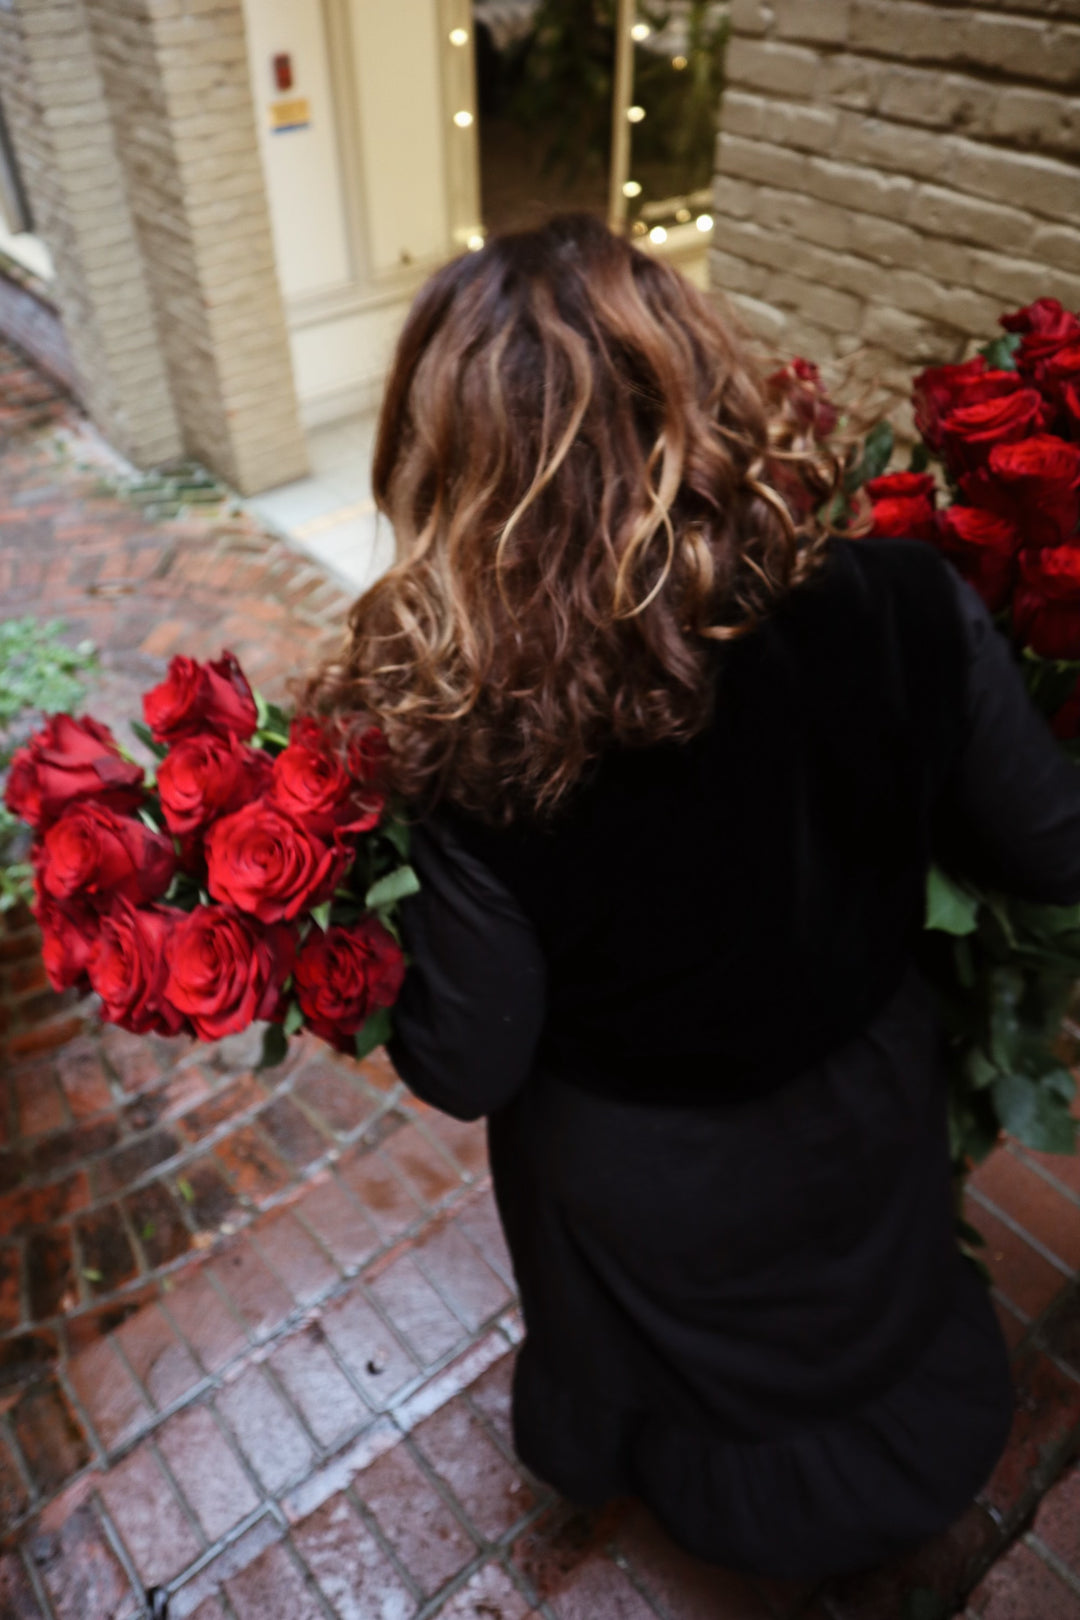 The Valentine Rose